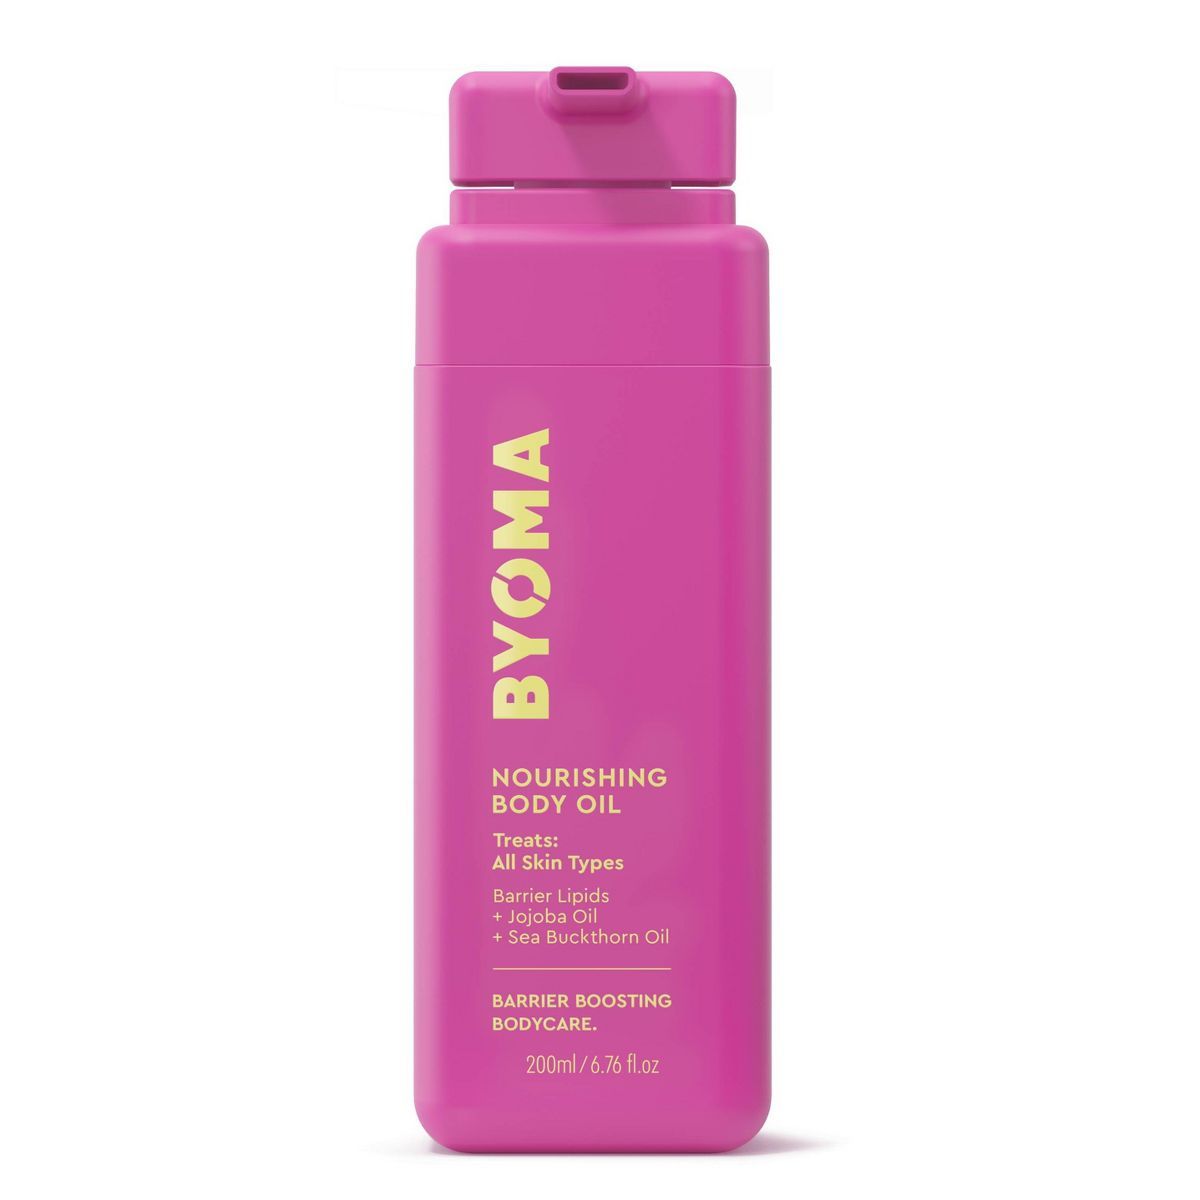 BYOMA Nourishing Body Oil - 6.76 fl oz | Target